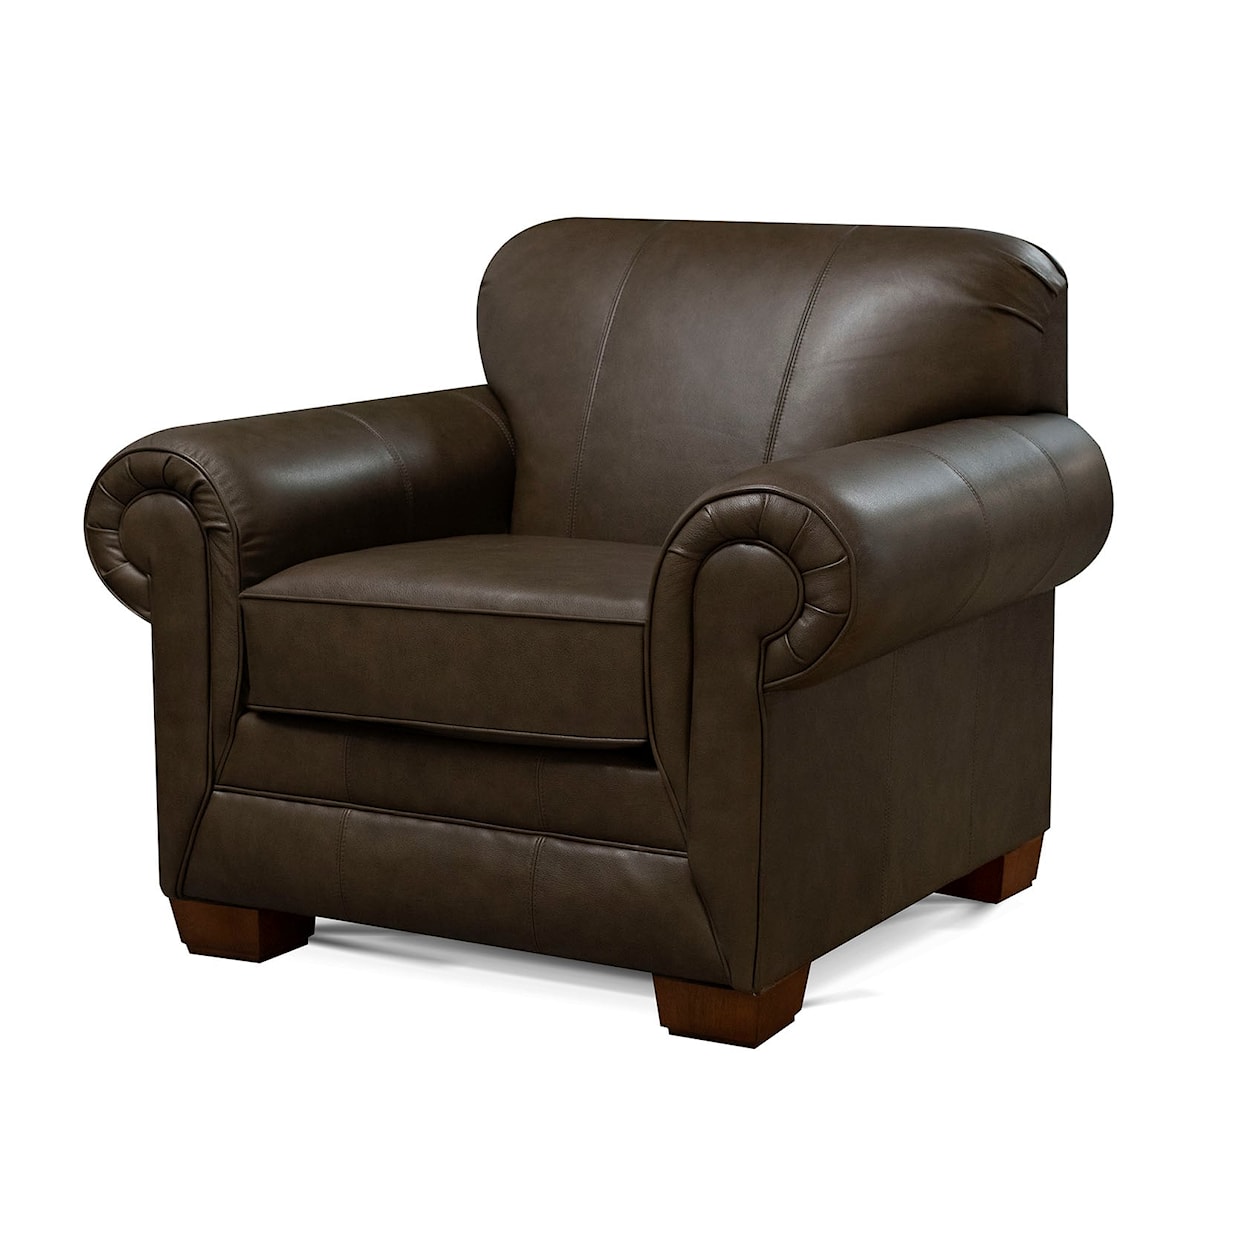 England 1430R/LR Series Leather Chair